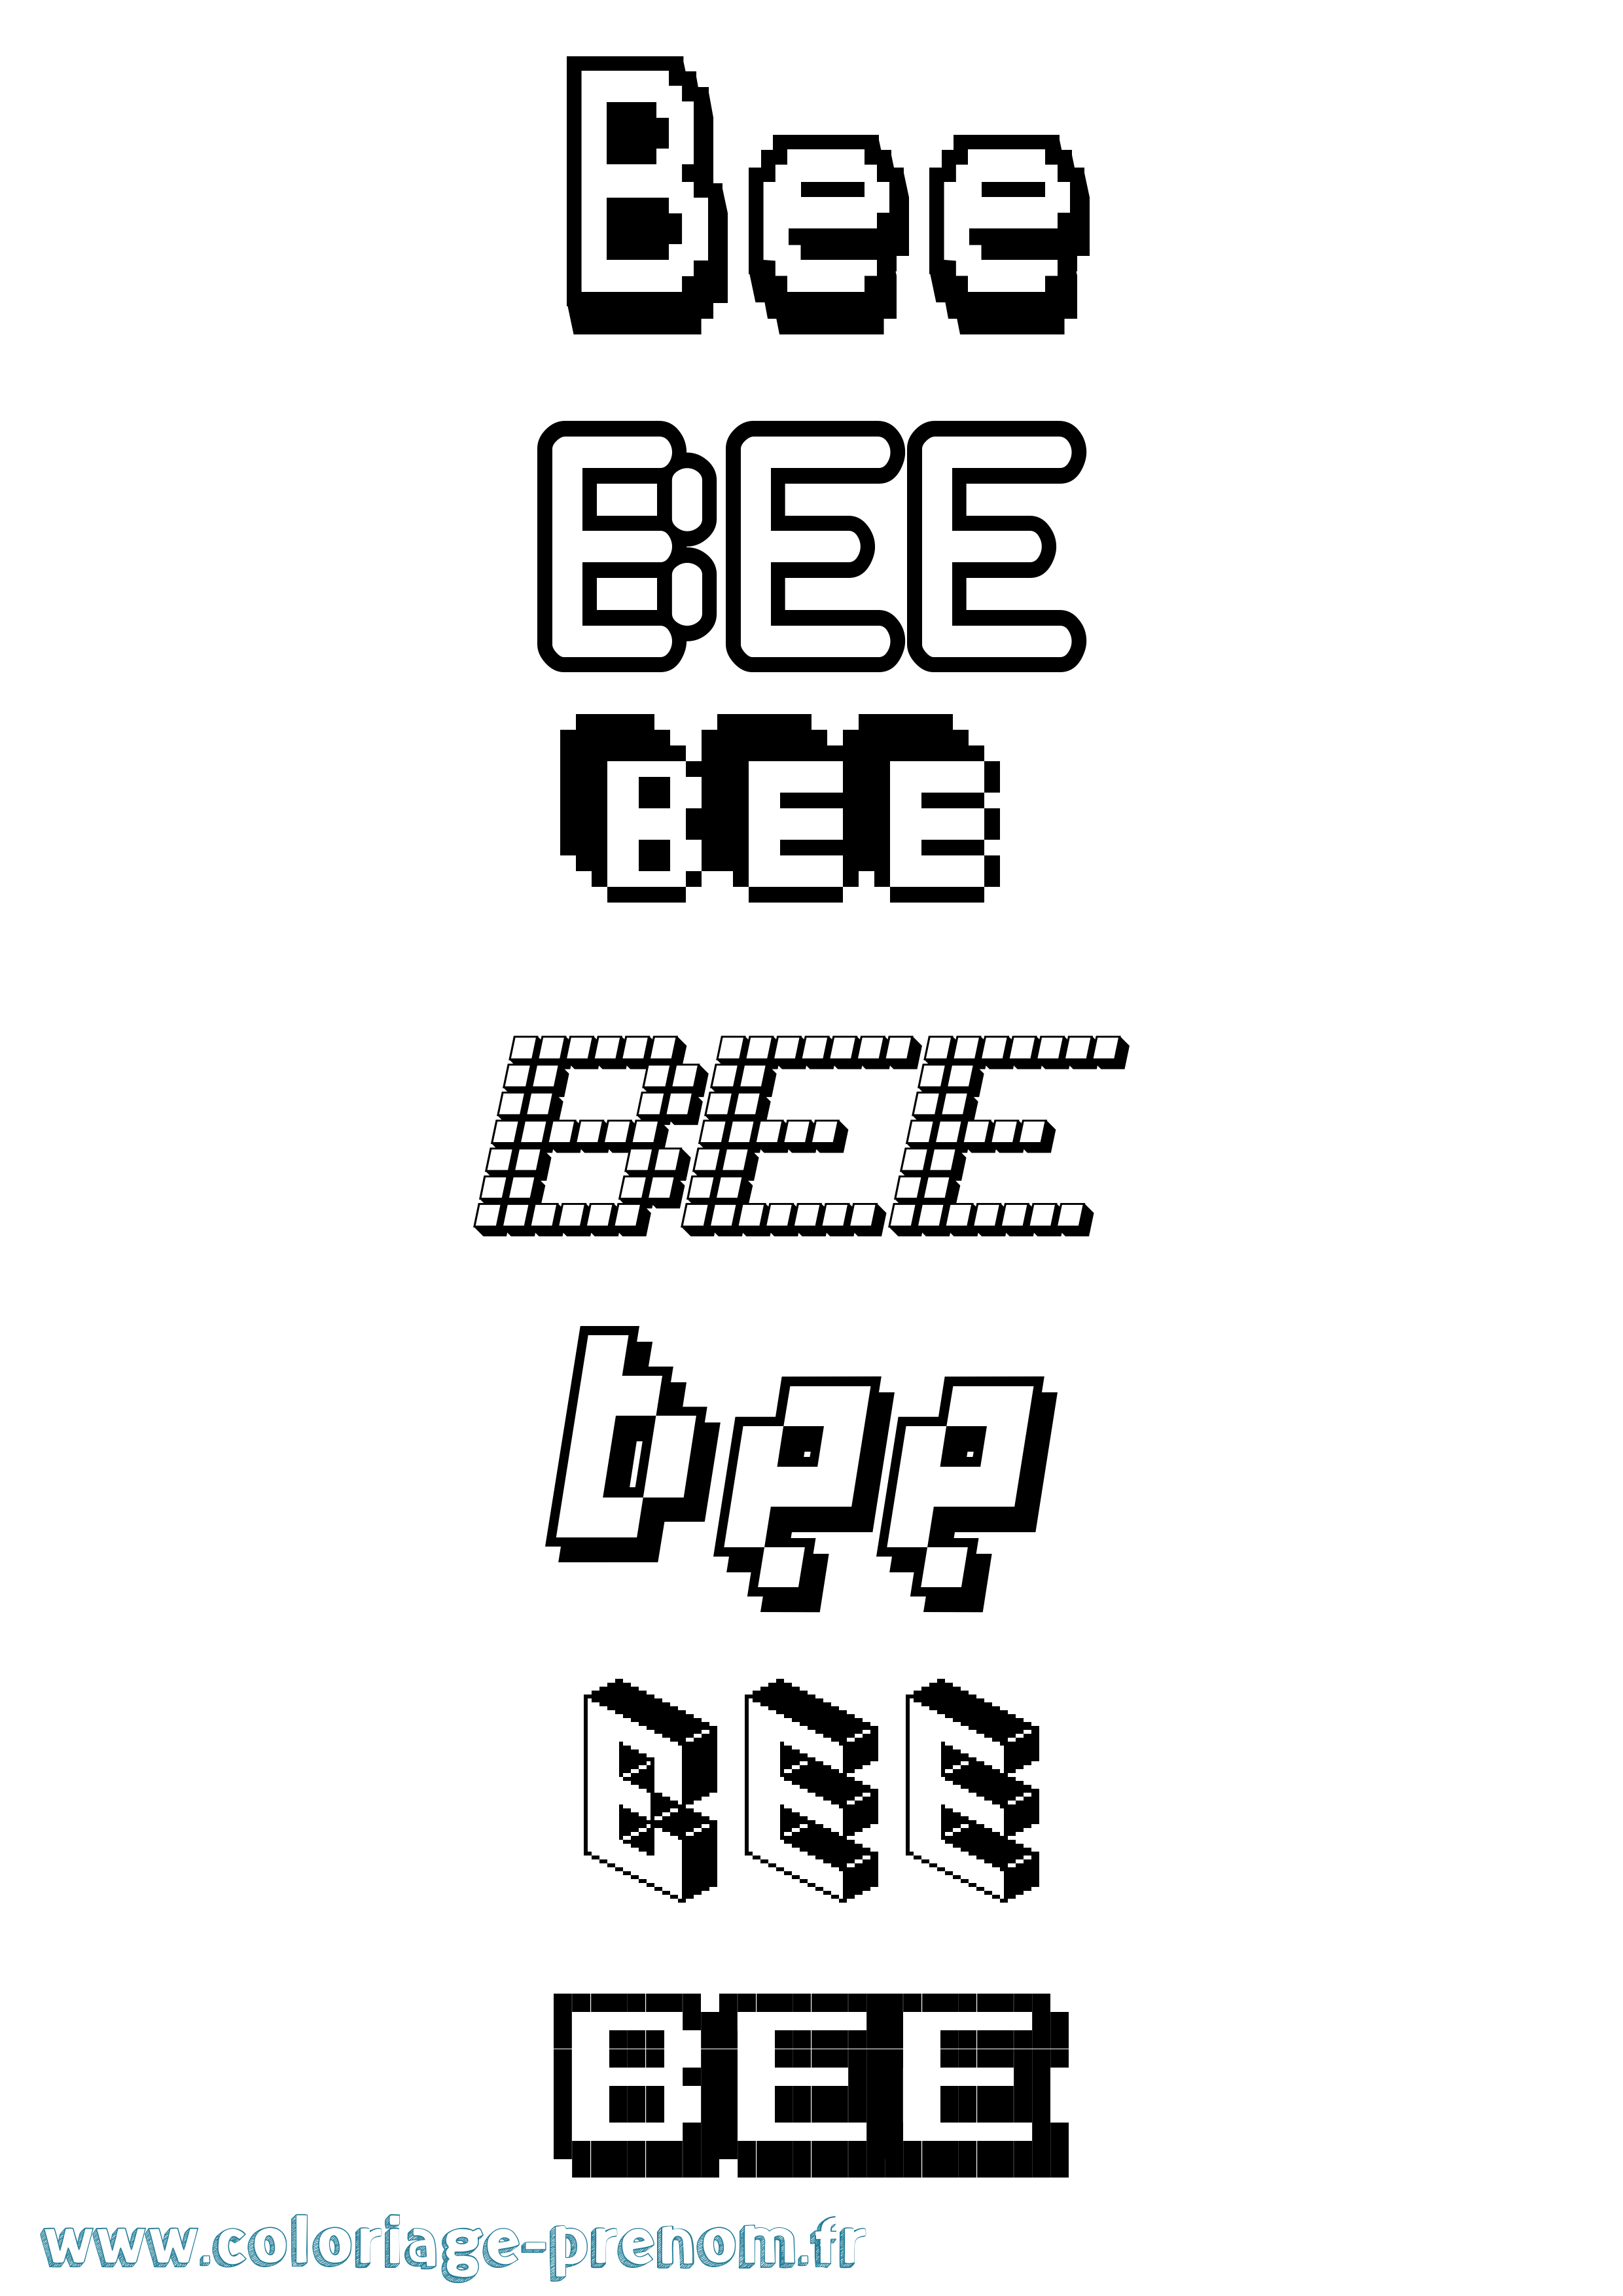 Coloriage prénom Bee Pixel